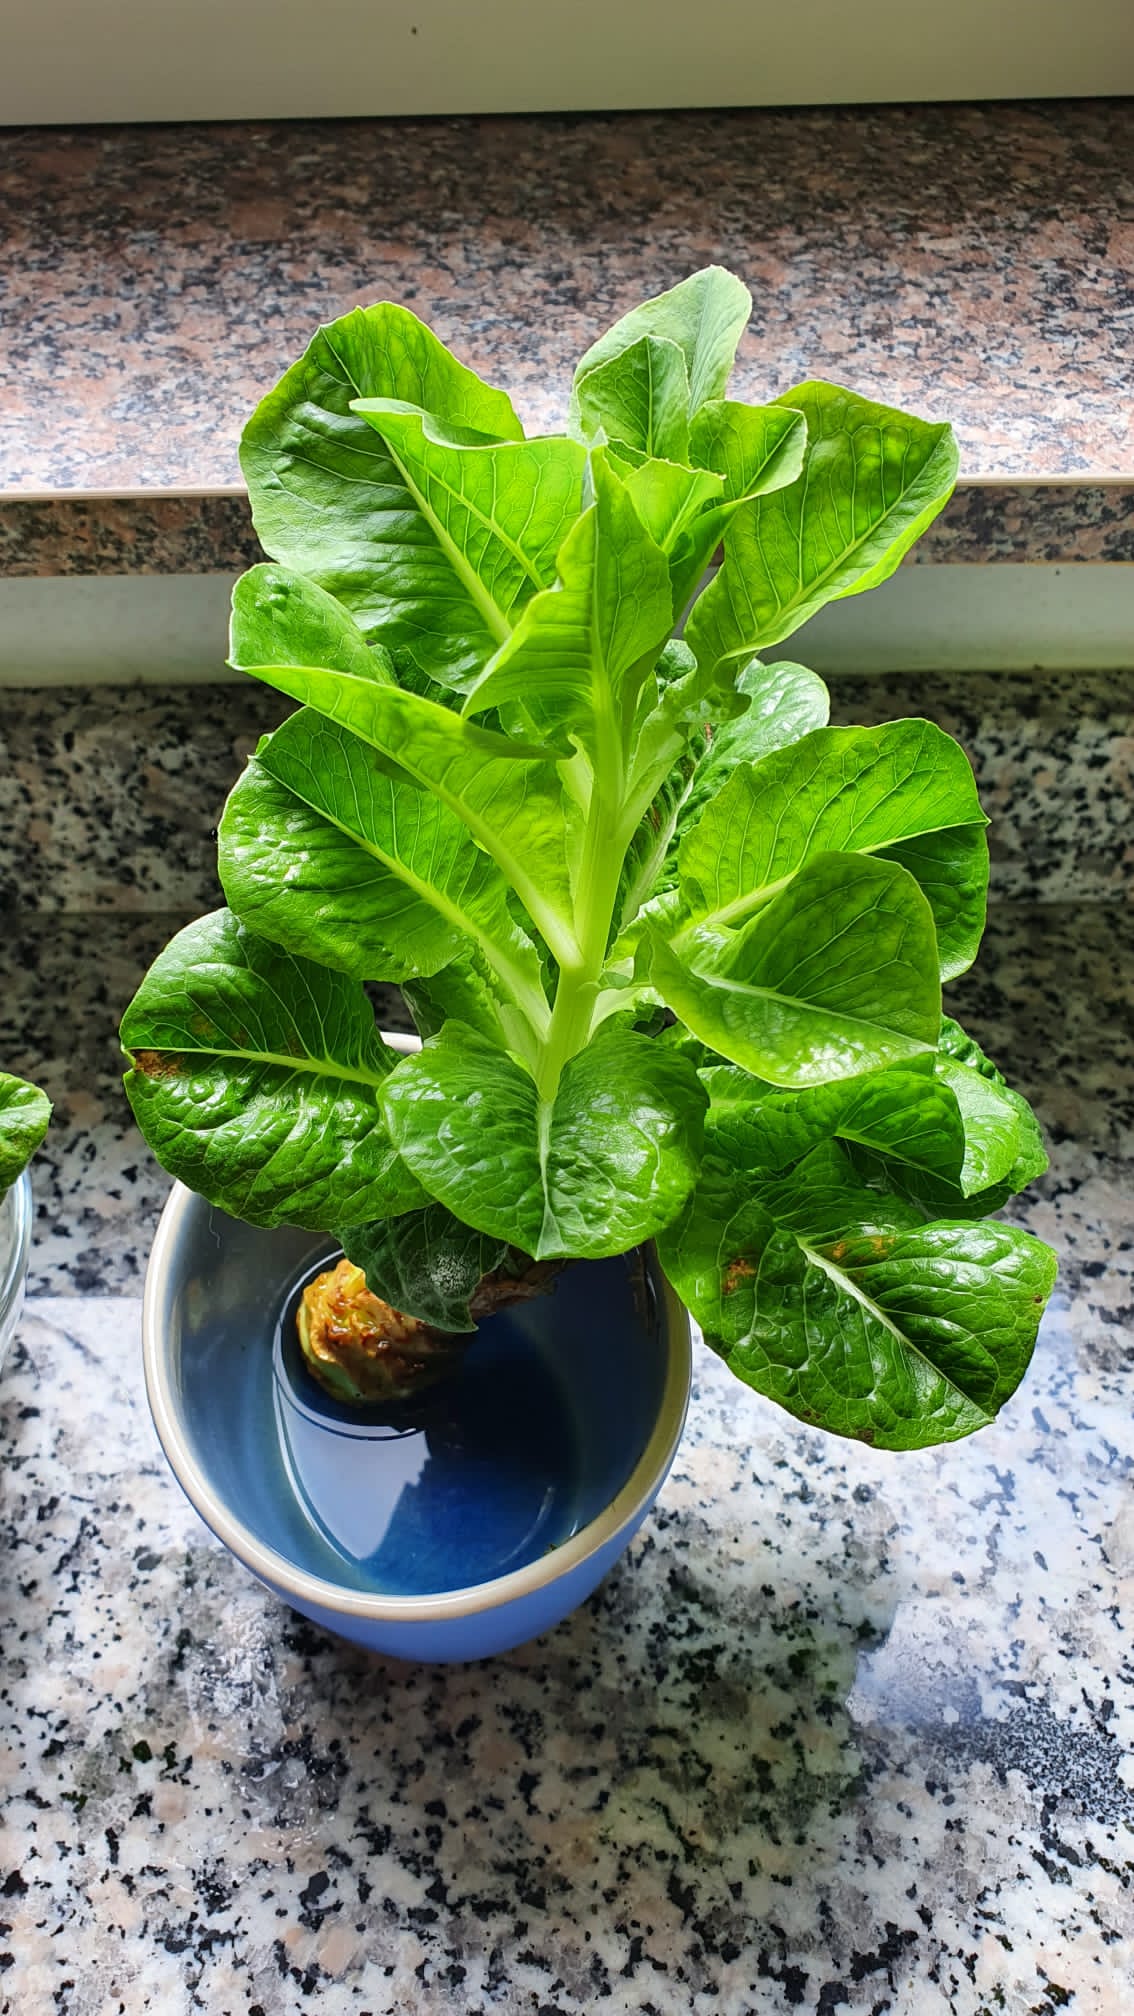 Salat ziehen aus Gemüseresten alten Salat neue Blätter wachsen lassen wie Anleitung